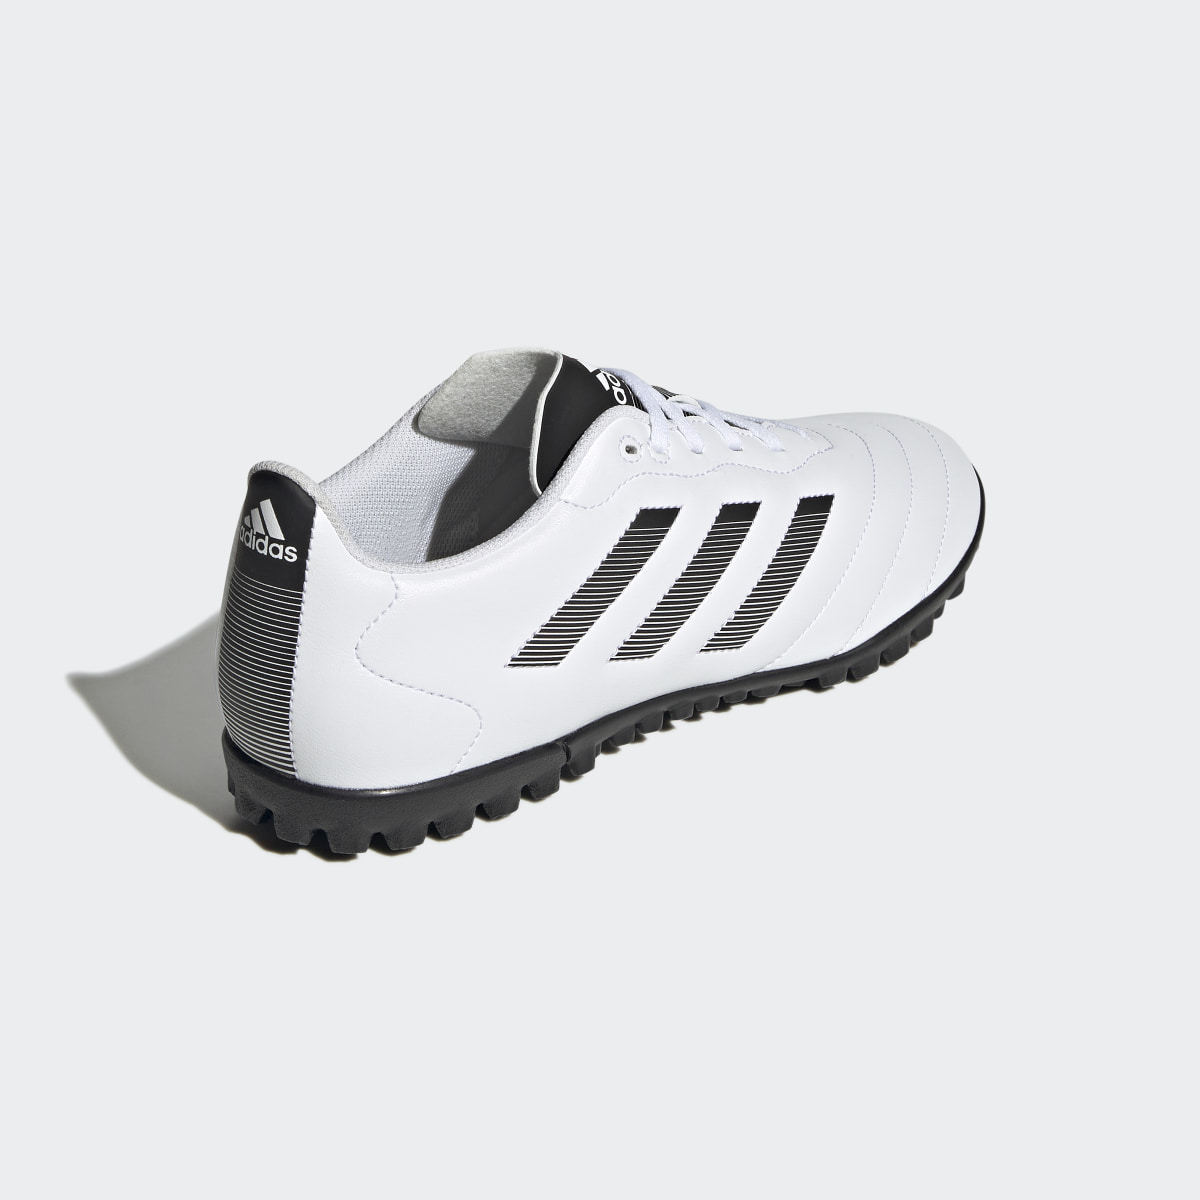 Adidas Calzado de Fútbol Goletto VIII Pasto Sintético. 6